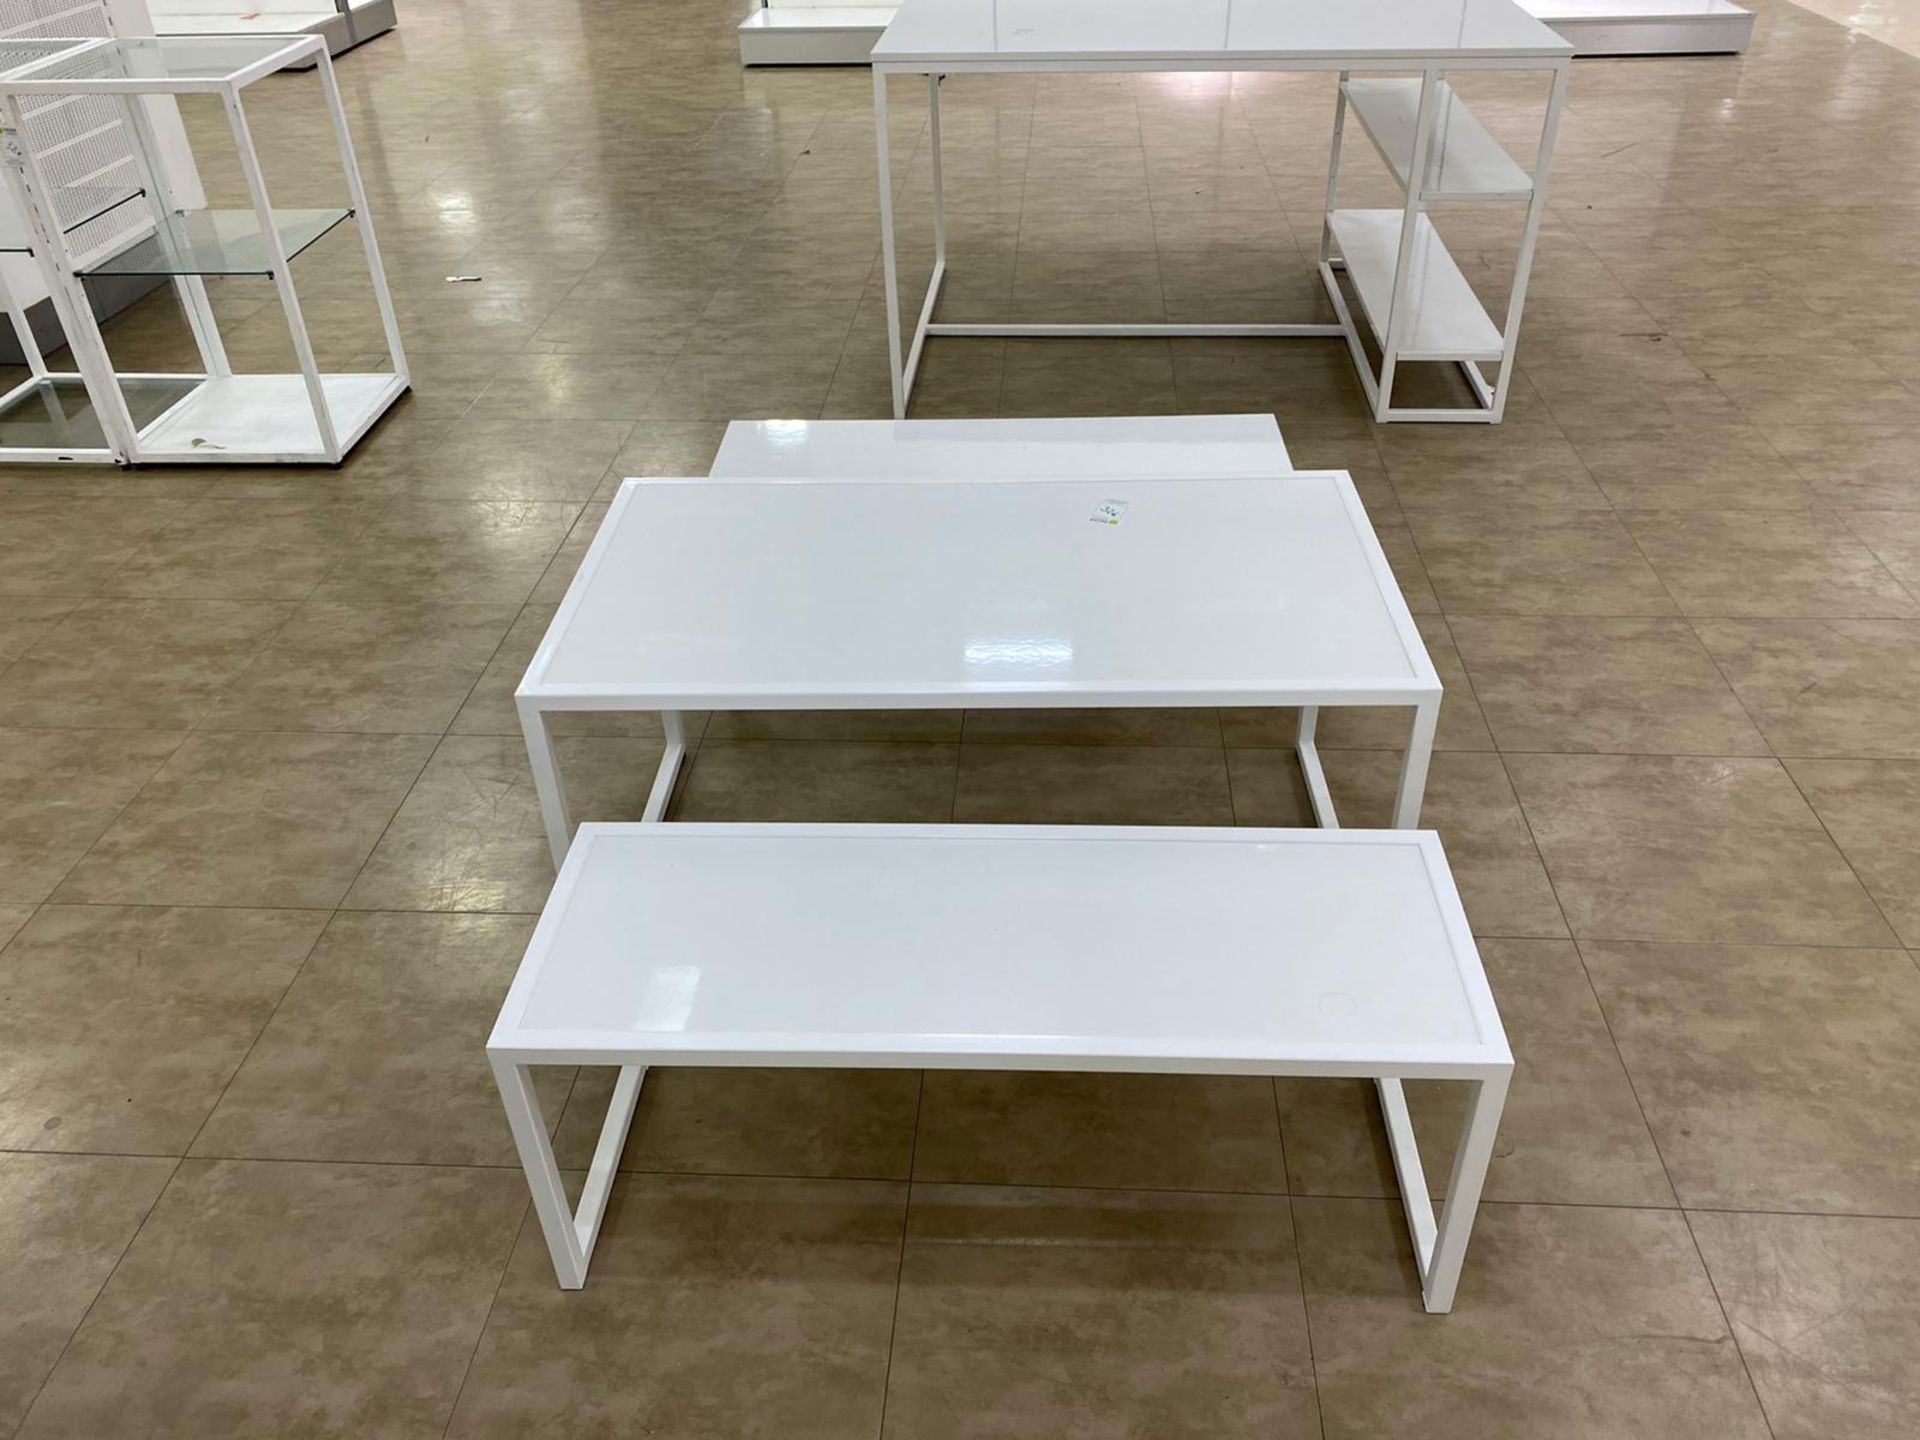 Two Seater White Metal Bench Set - Image 3 of 3